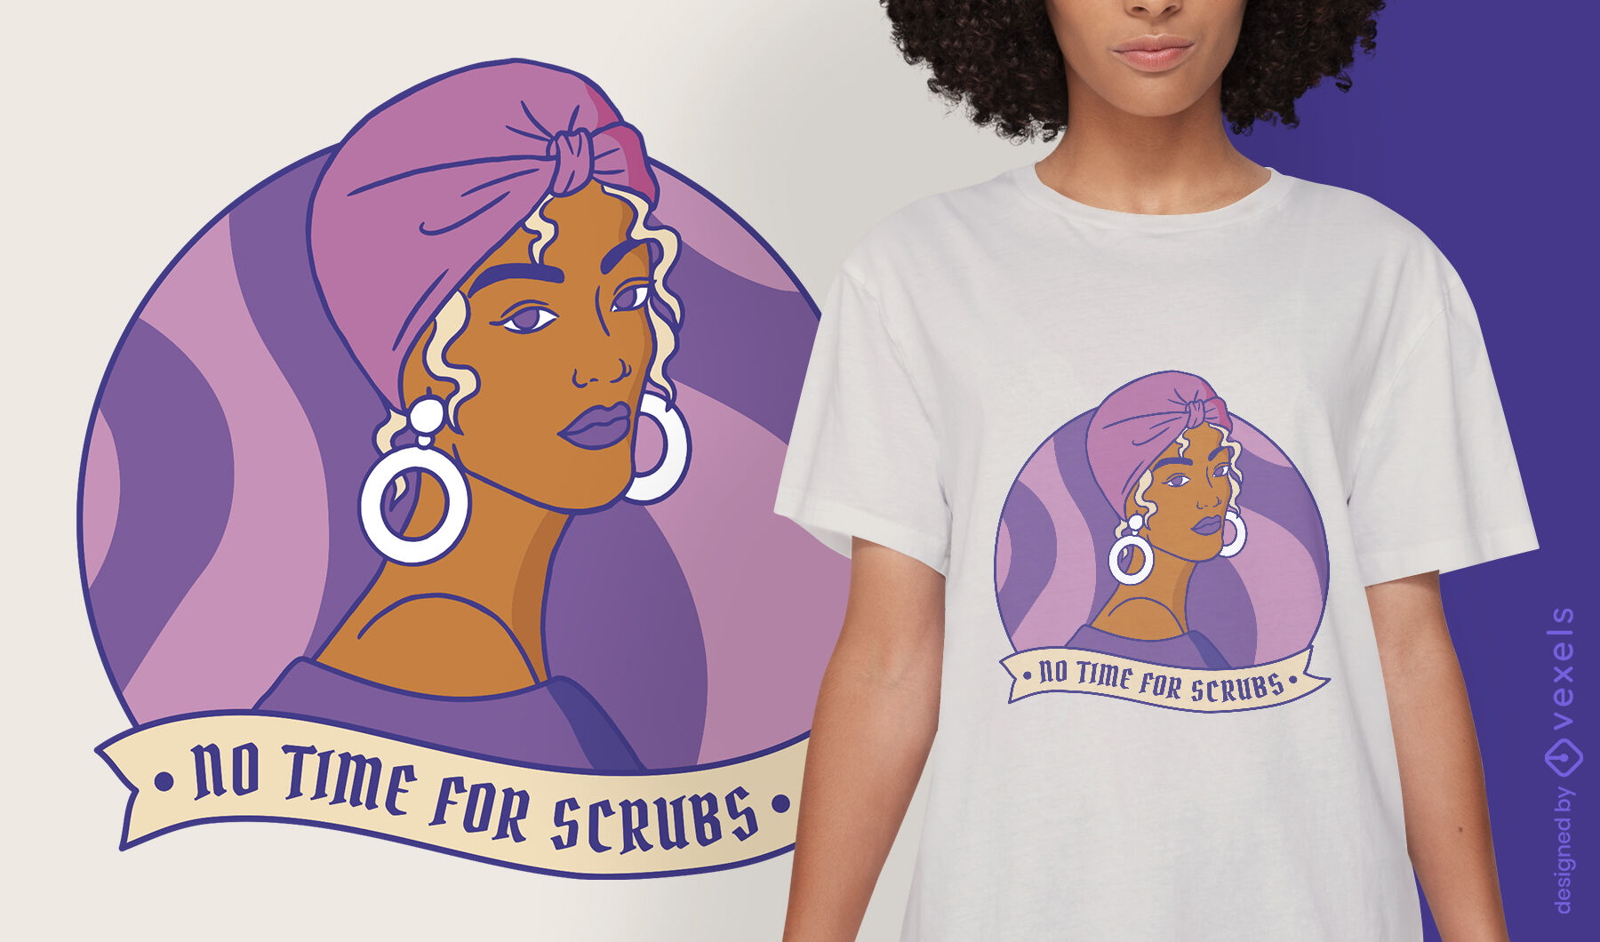 Modernes starkes Frauen-T-Shirt-Design